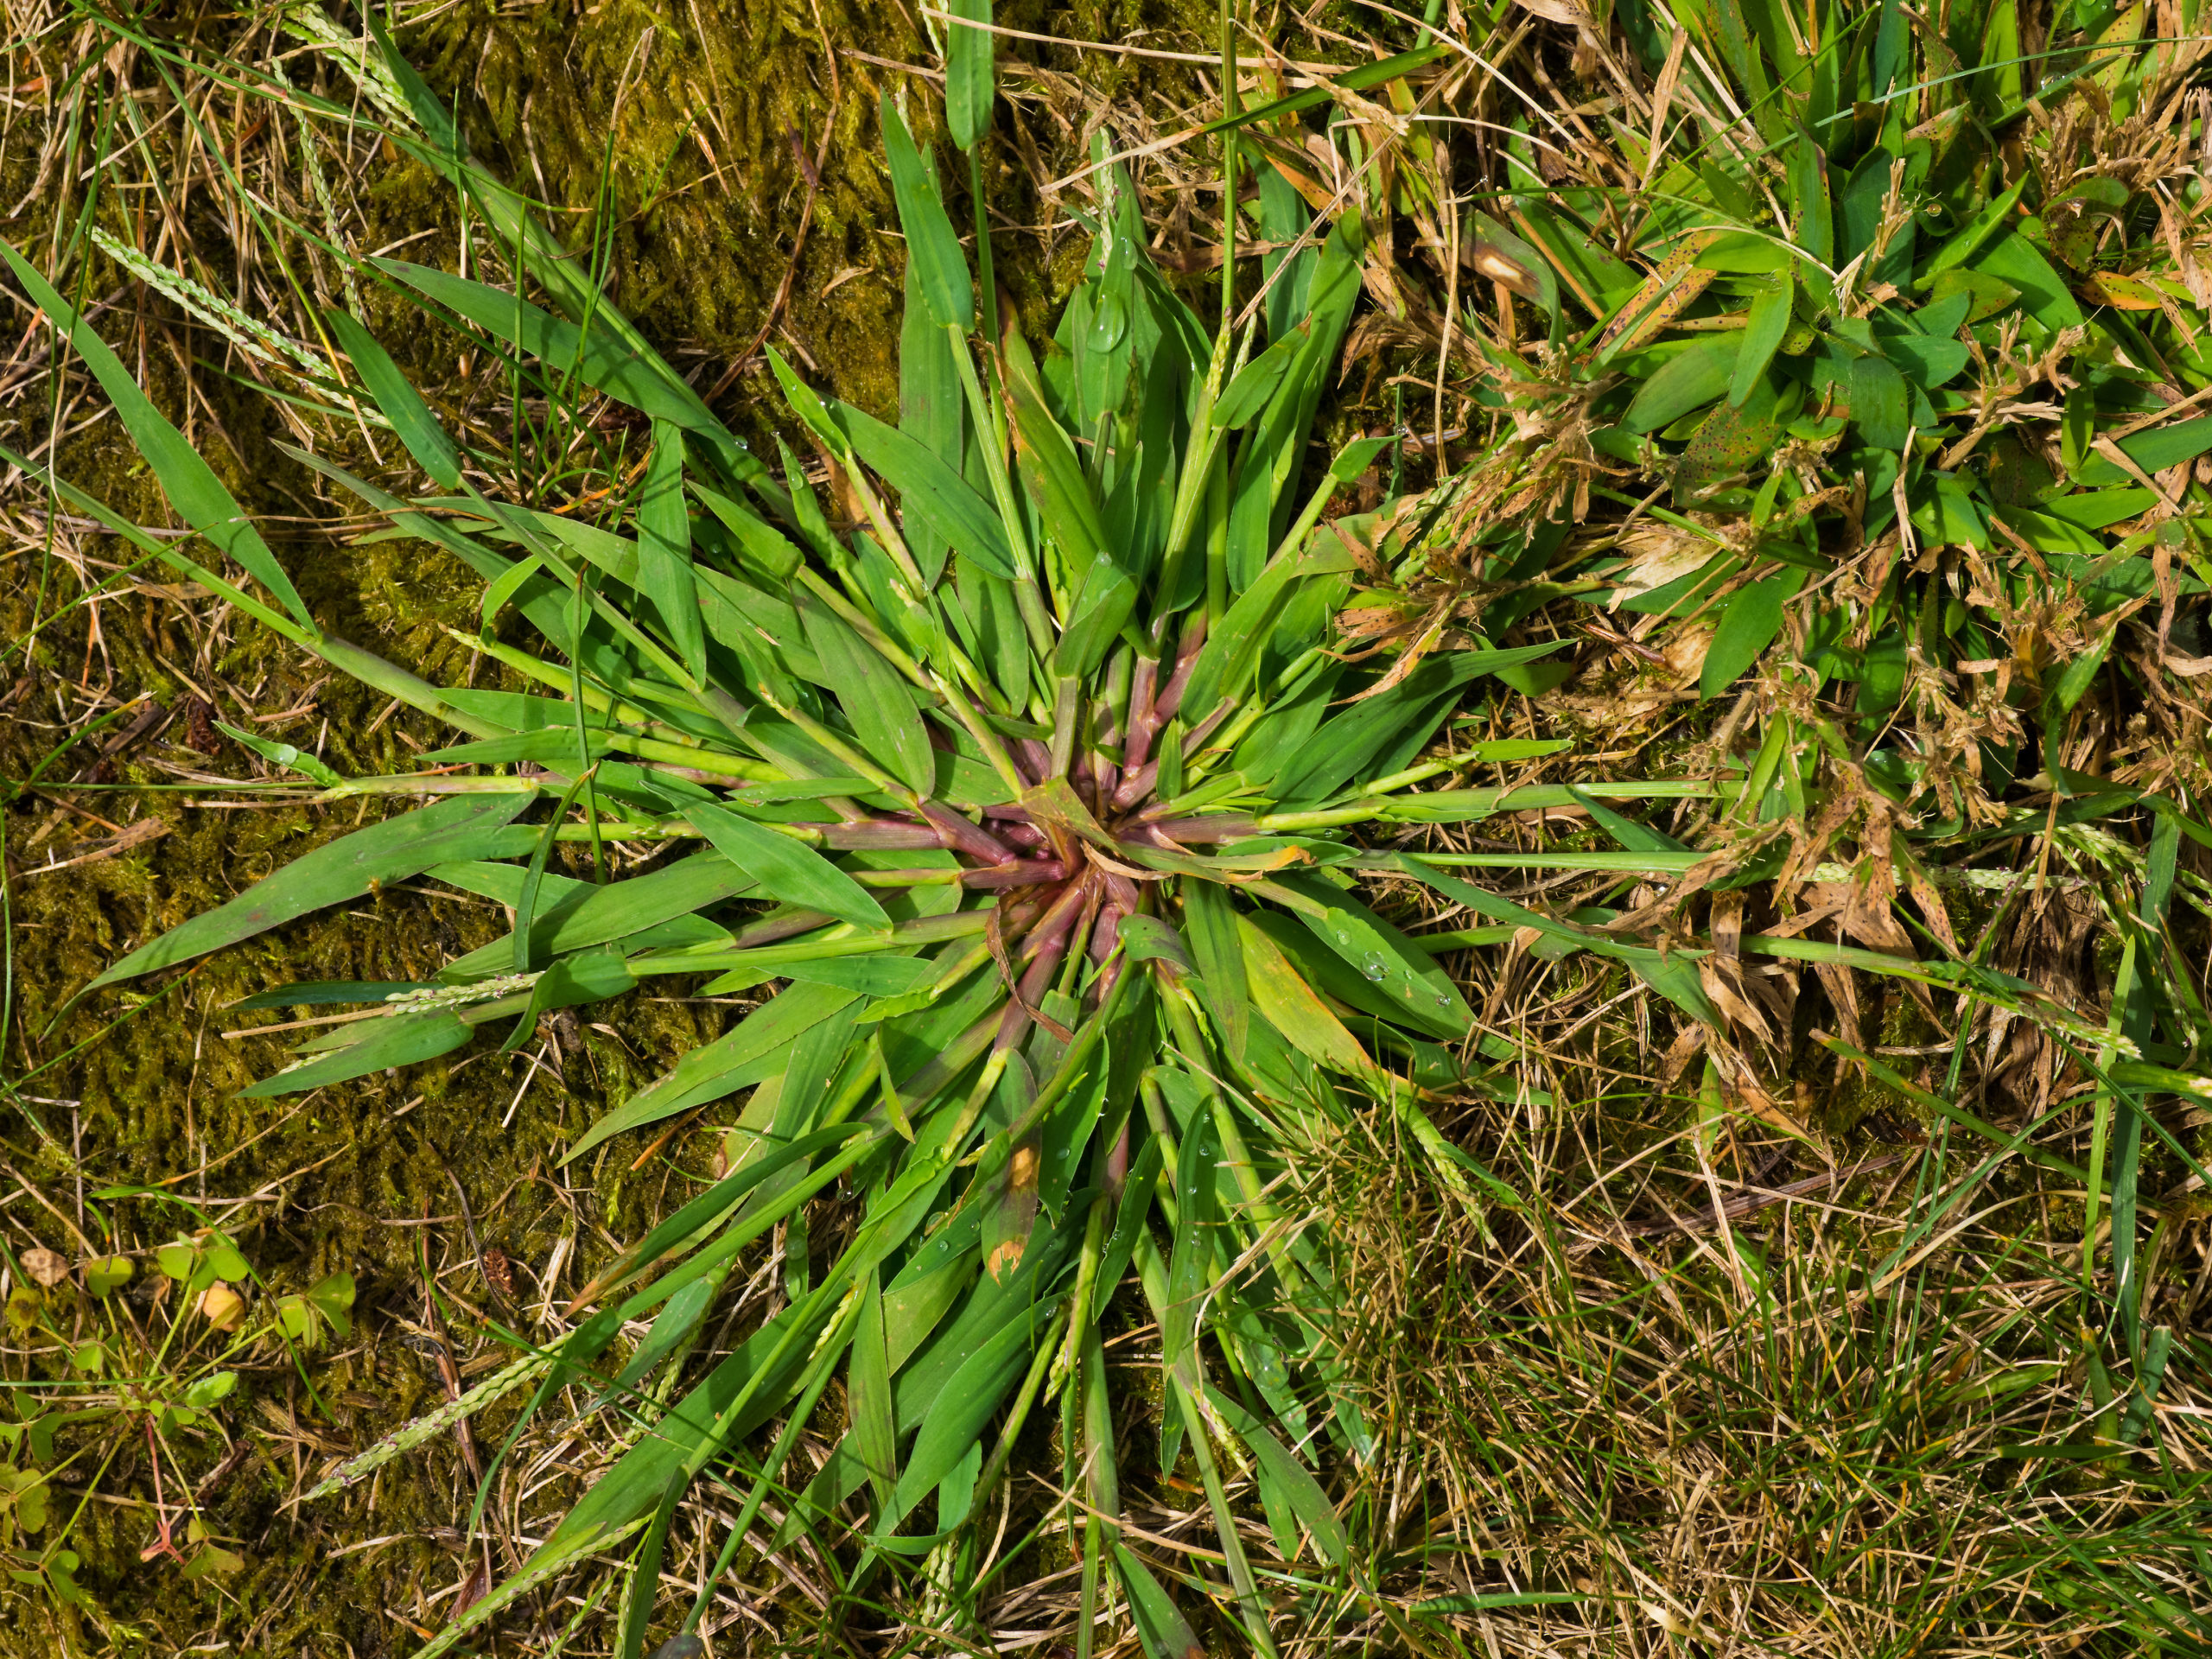 A cluster of crabgrass